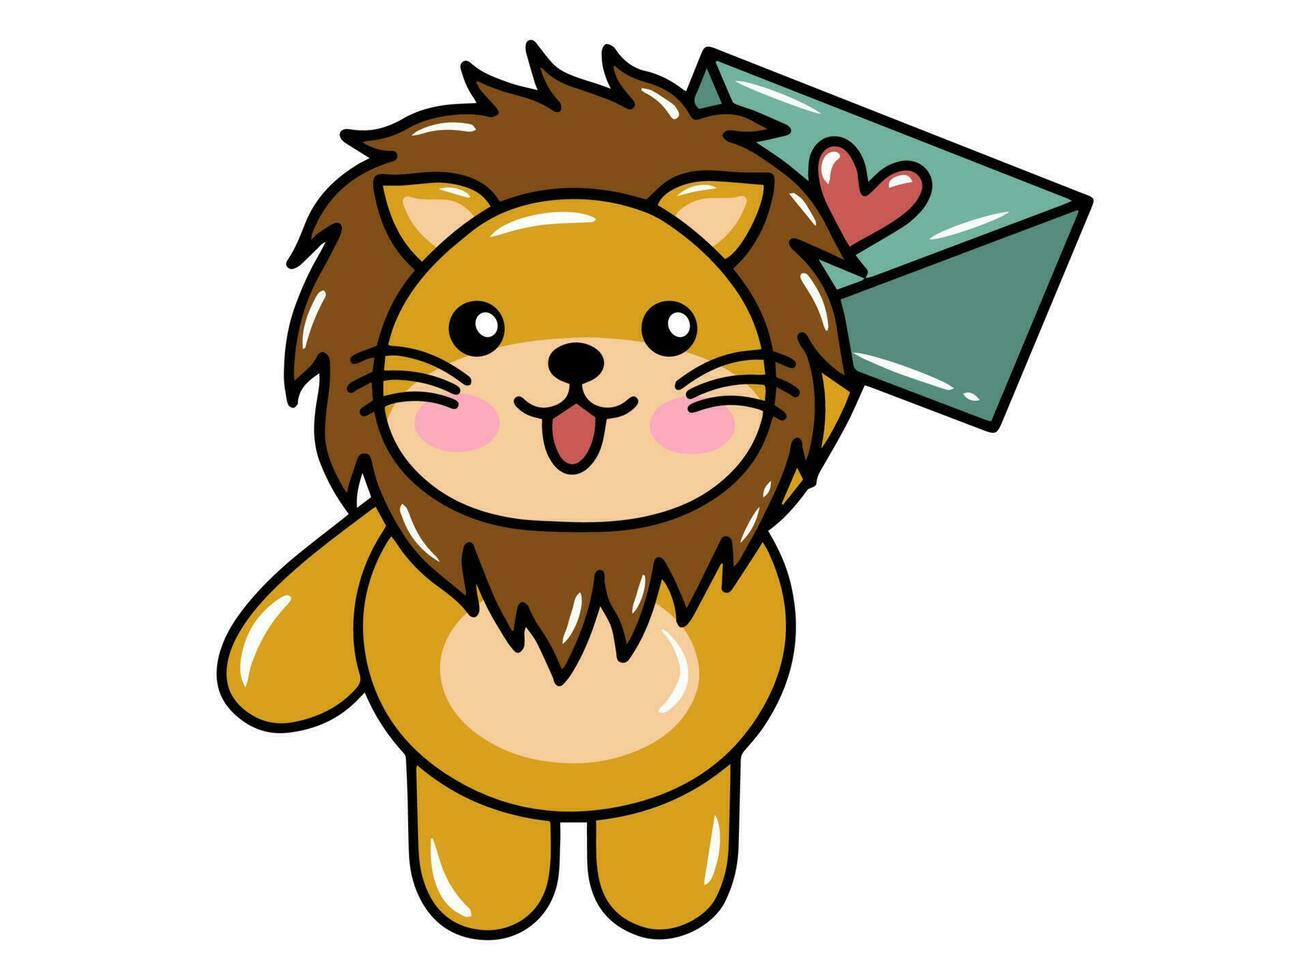 Cute cartoon Lion drawing illustration vector